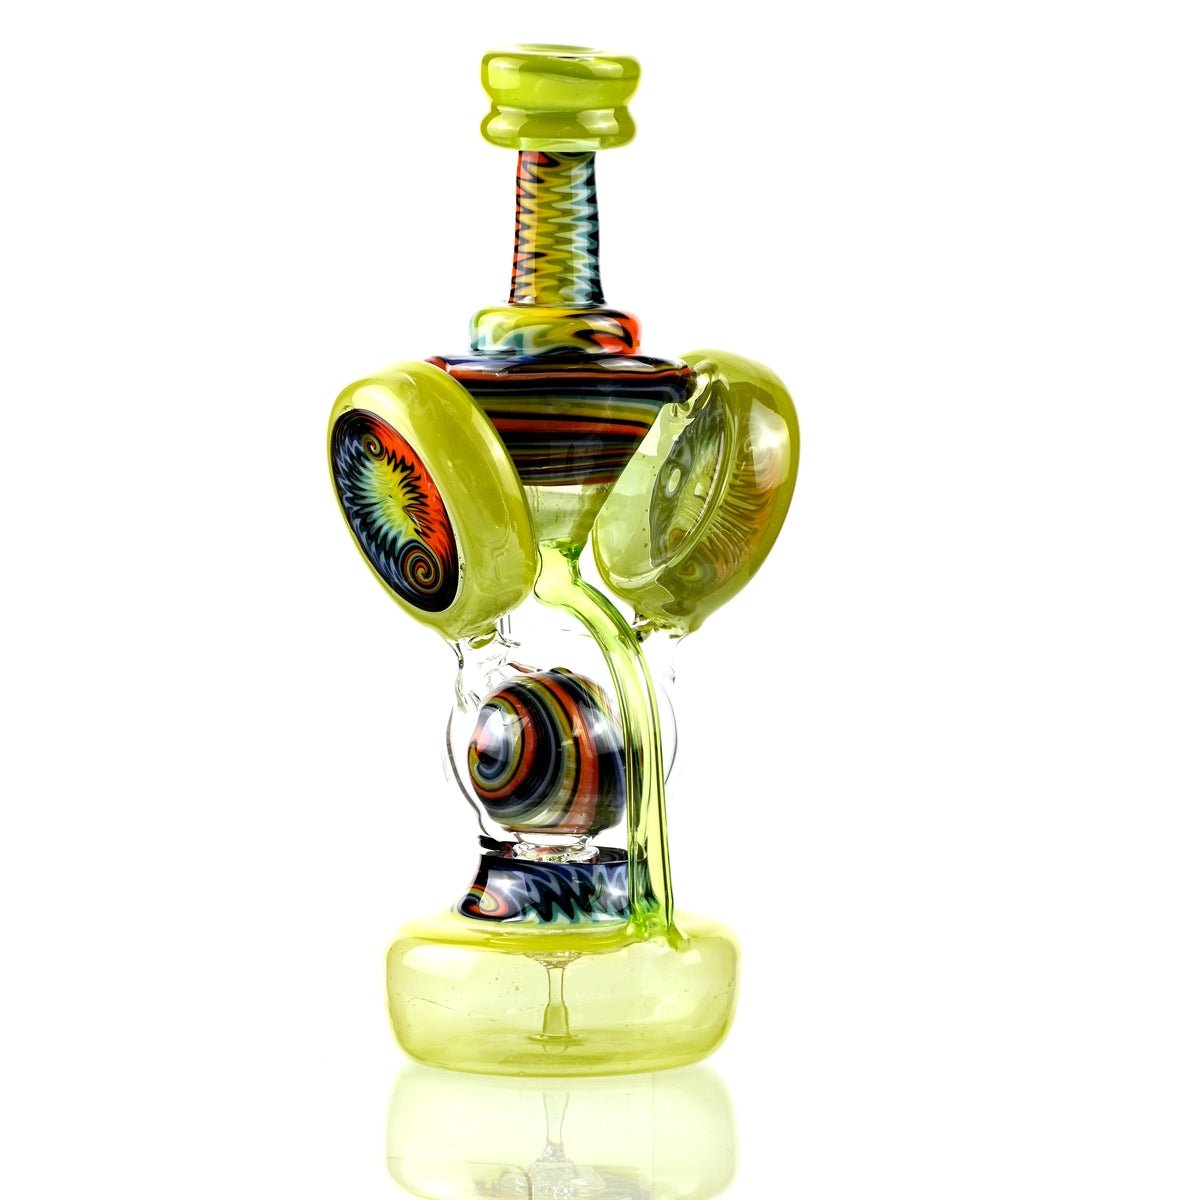 Clarkie Clark Glass Shogun Floating Ball Full line work / full color 1 - Smoke Spot Smoke Shop